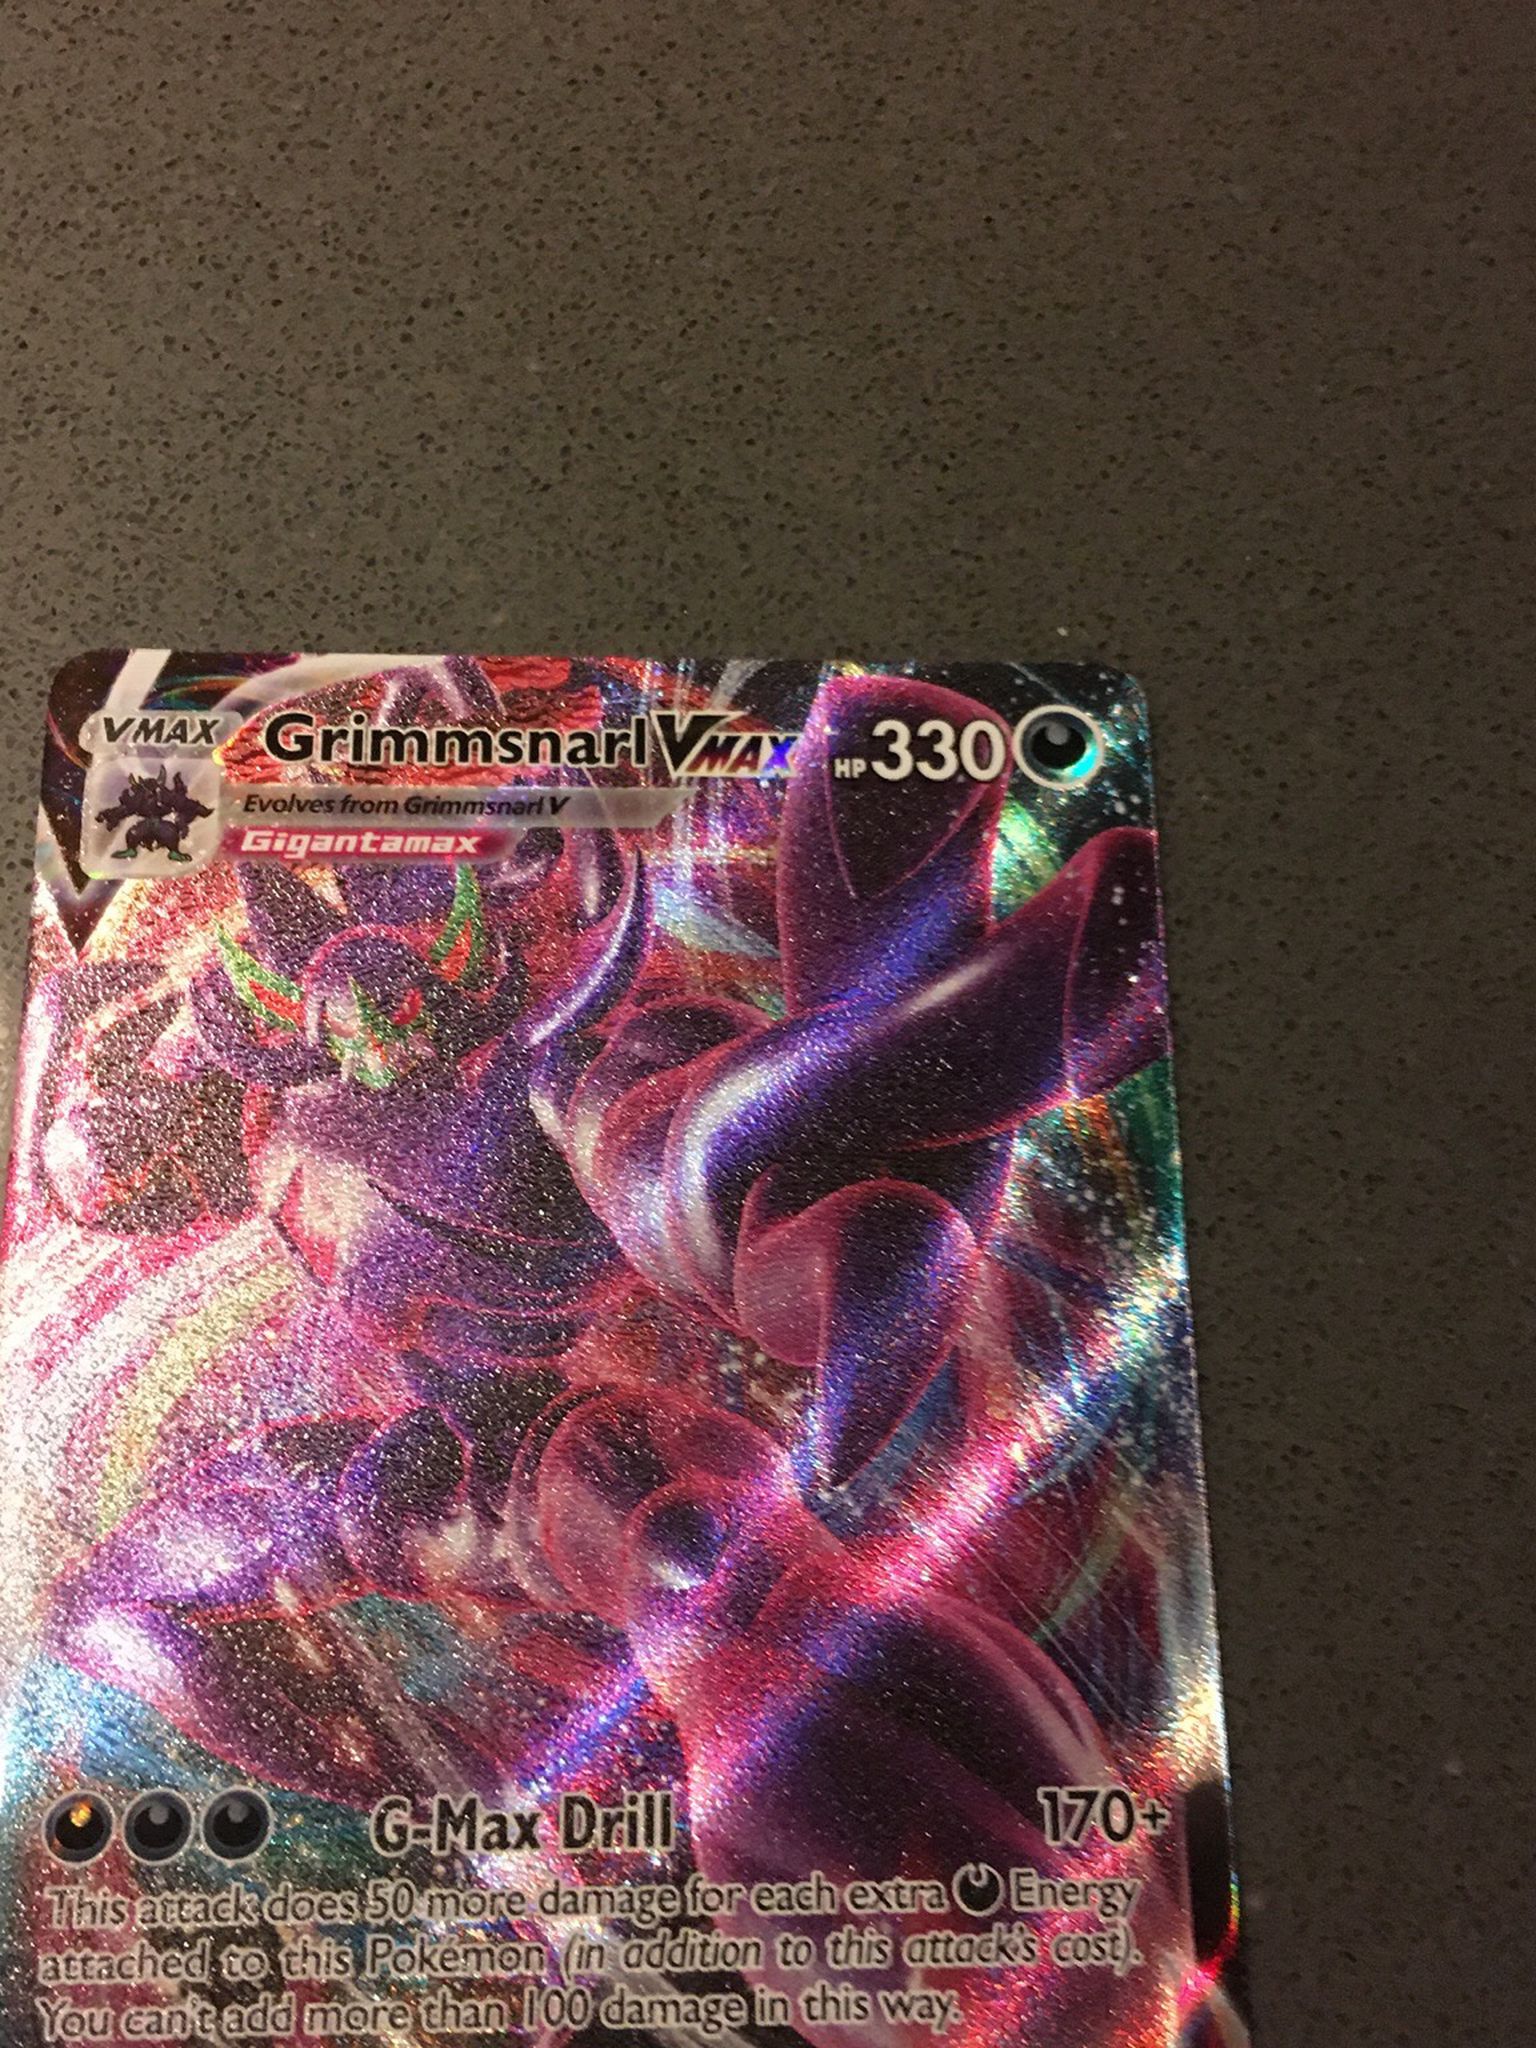 Very Rare Grimmsnarl Vmax Pokémon Card